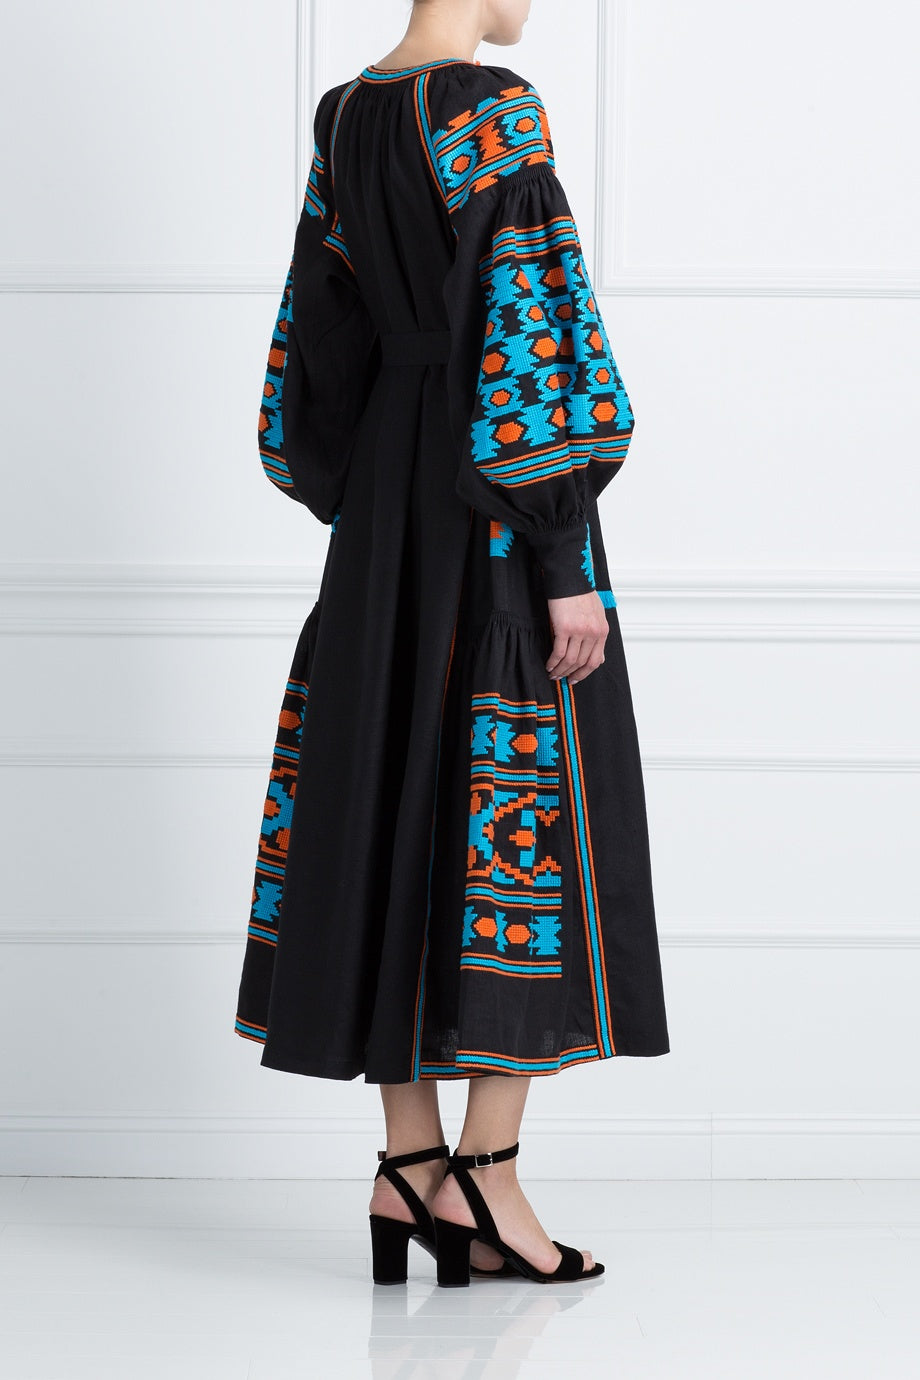 Embroidered linen dress Fashion boho outfit vyshyvanka